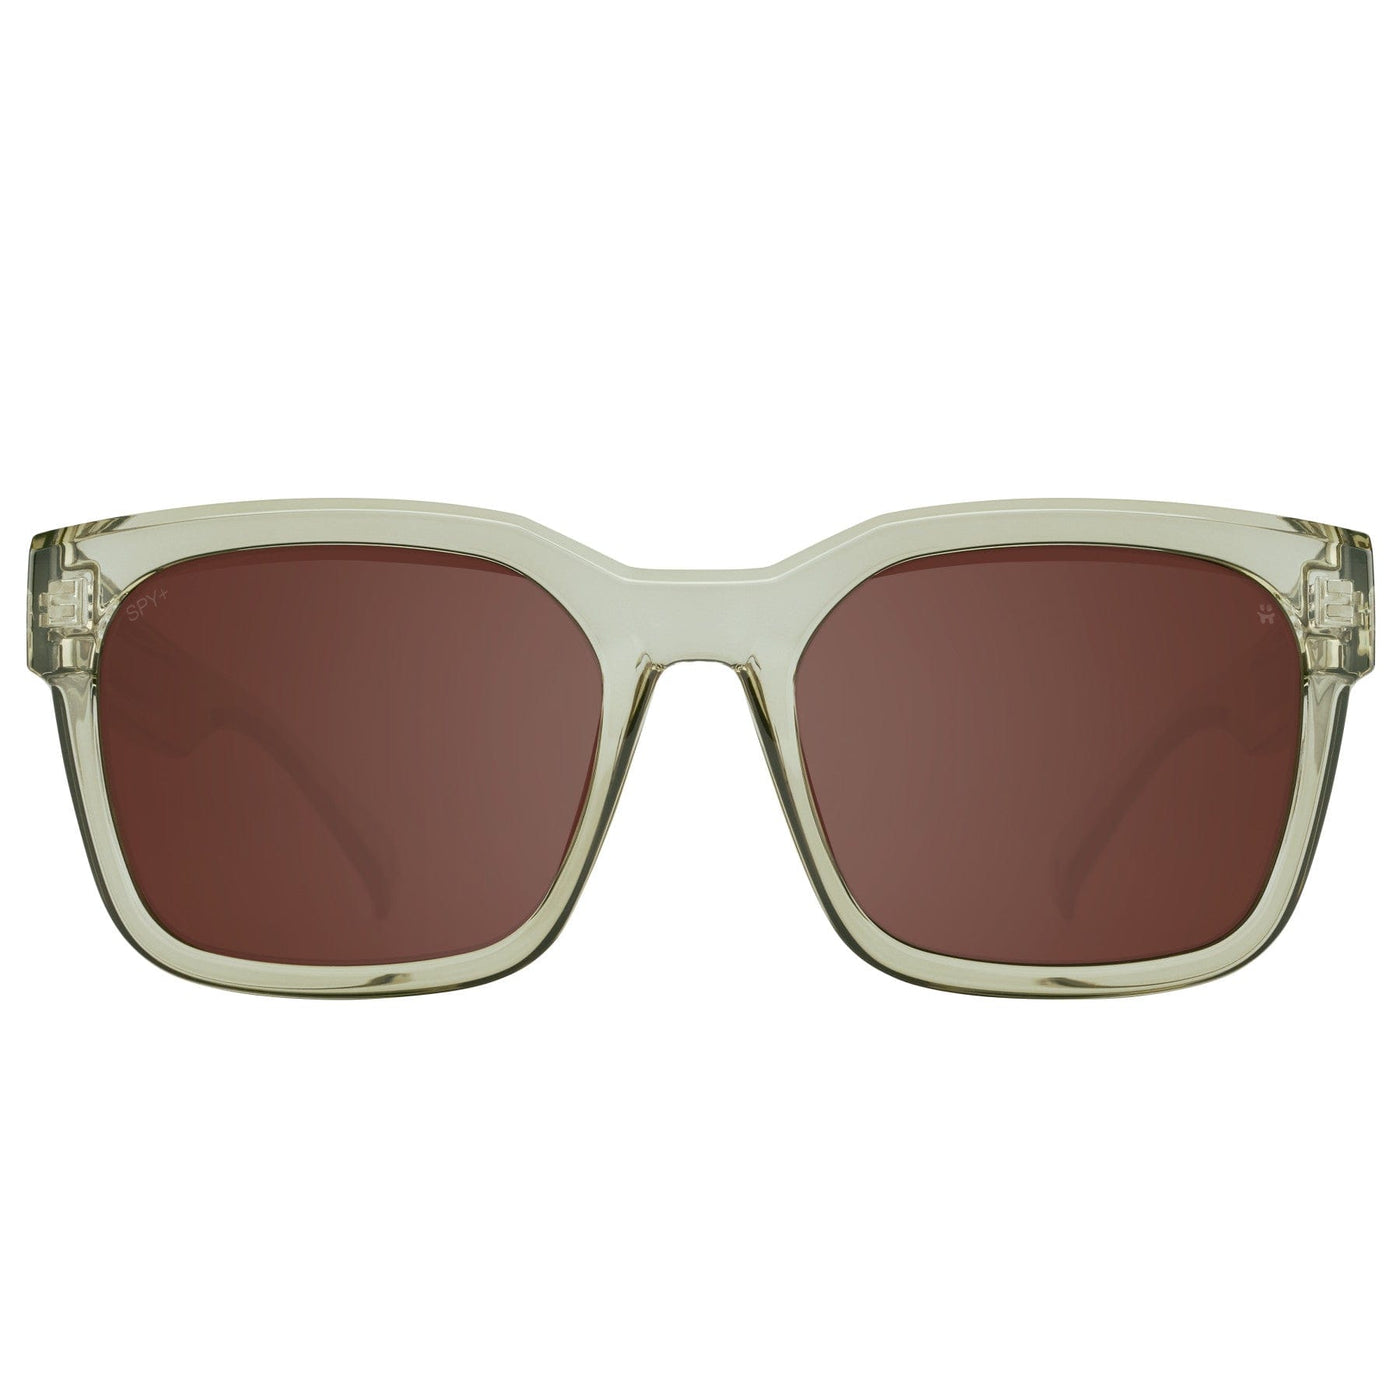 SPY DESSA Polarized Sunglasses, Happy Lens - Bronze 8Lines Shop - Fast Shipping